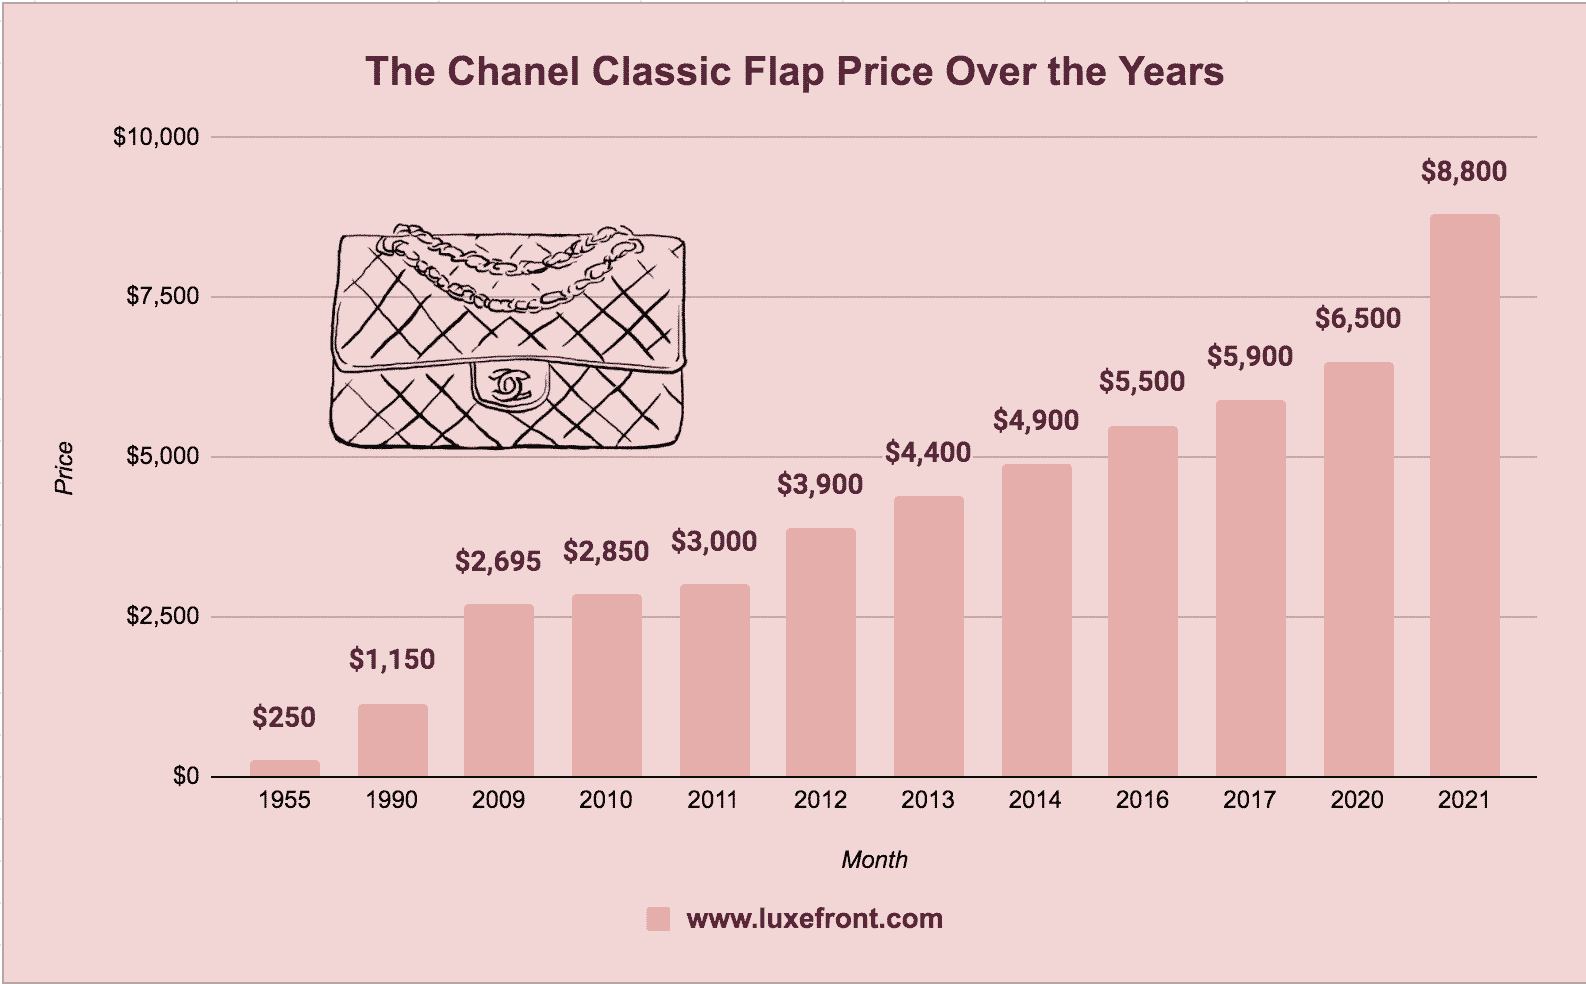 Louis Vuitton, Chanel Rise as Prada Falls in Luxury Brand Survey